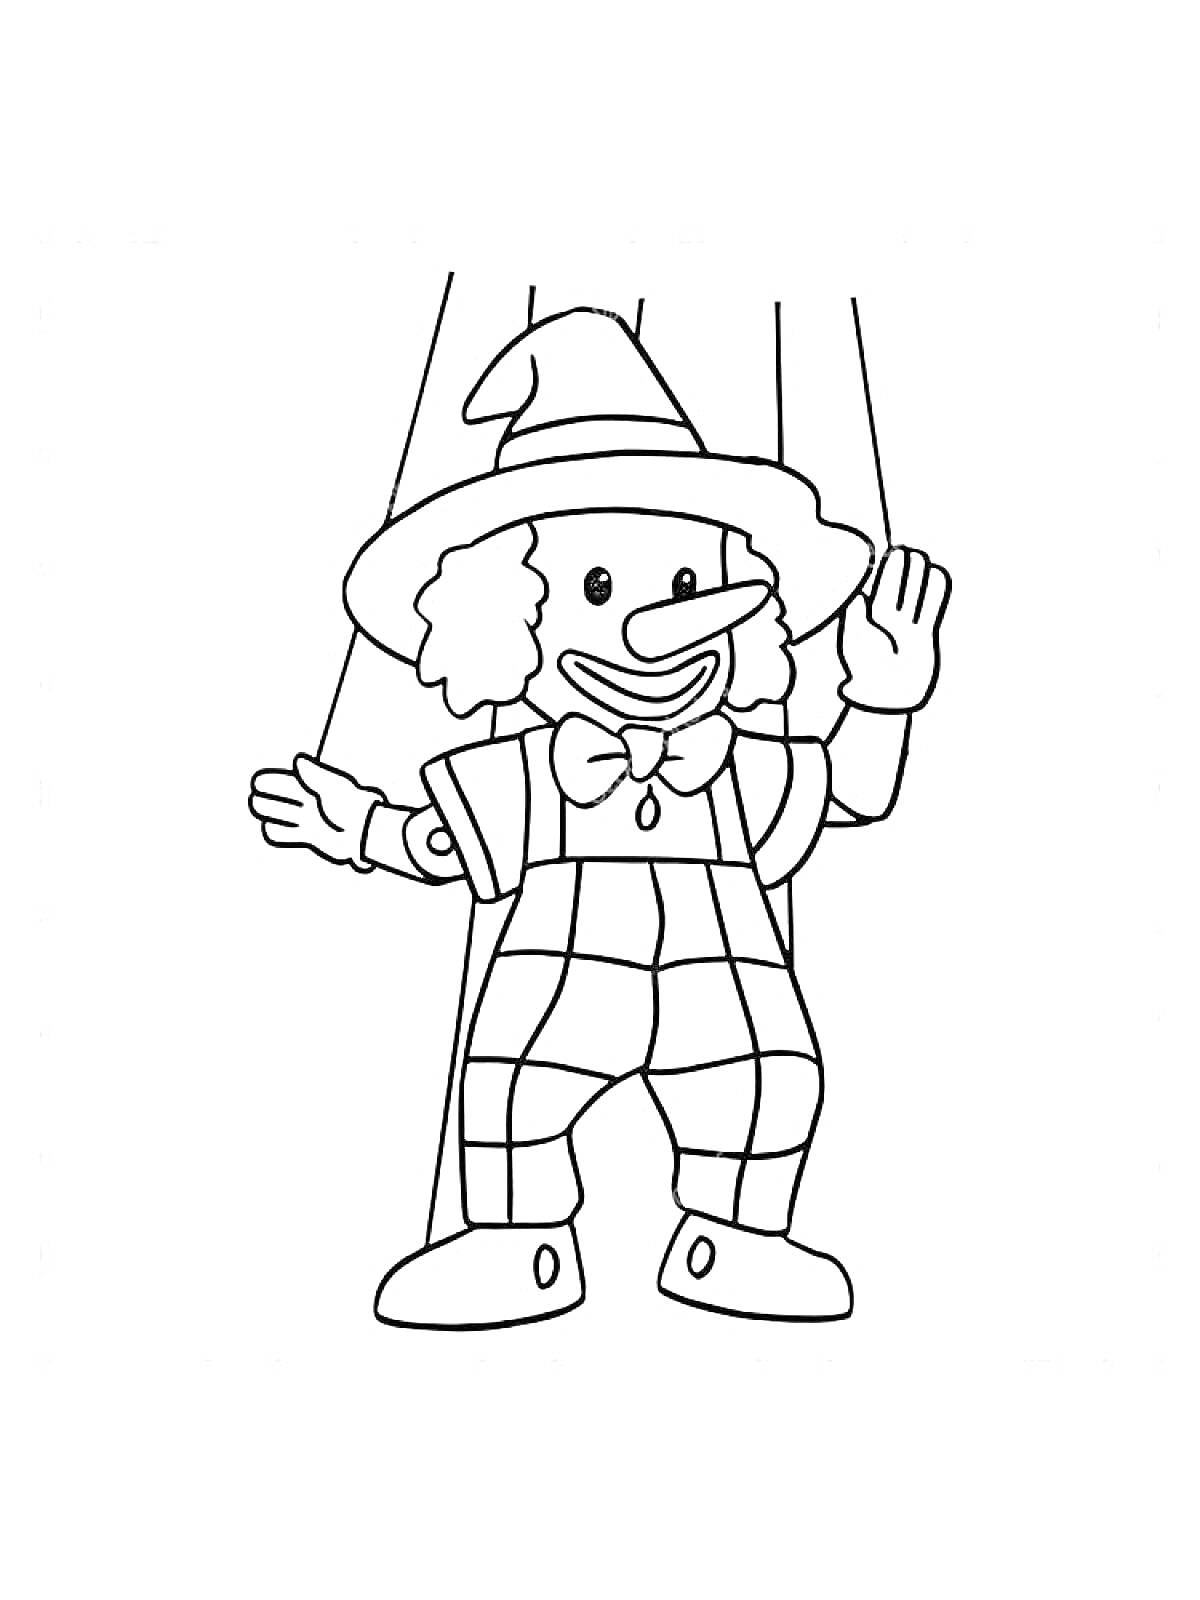 Раскраска Марионетка-клоун в шляпе и костюме с клетчатыми штанами